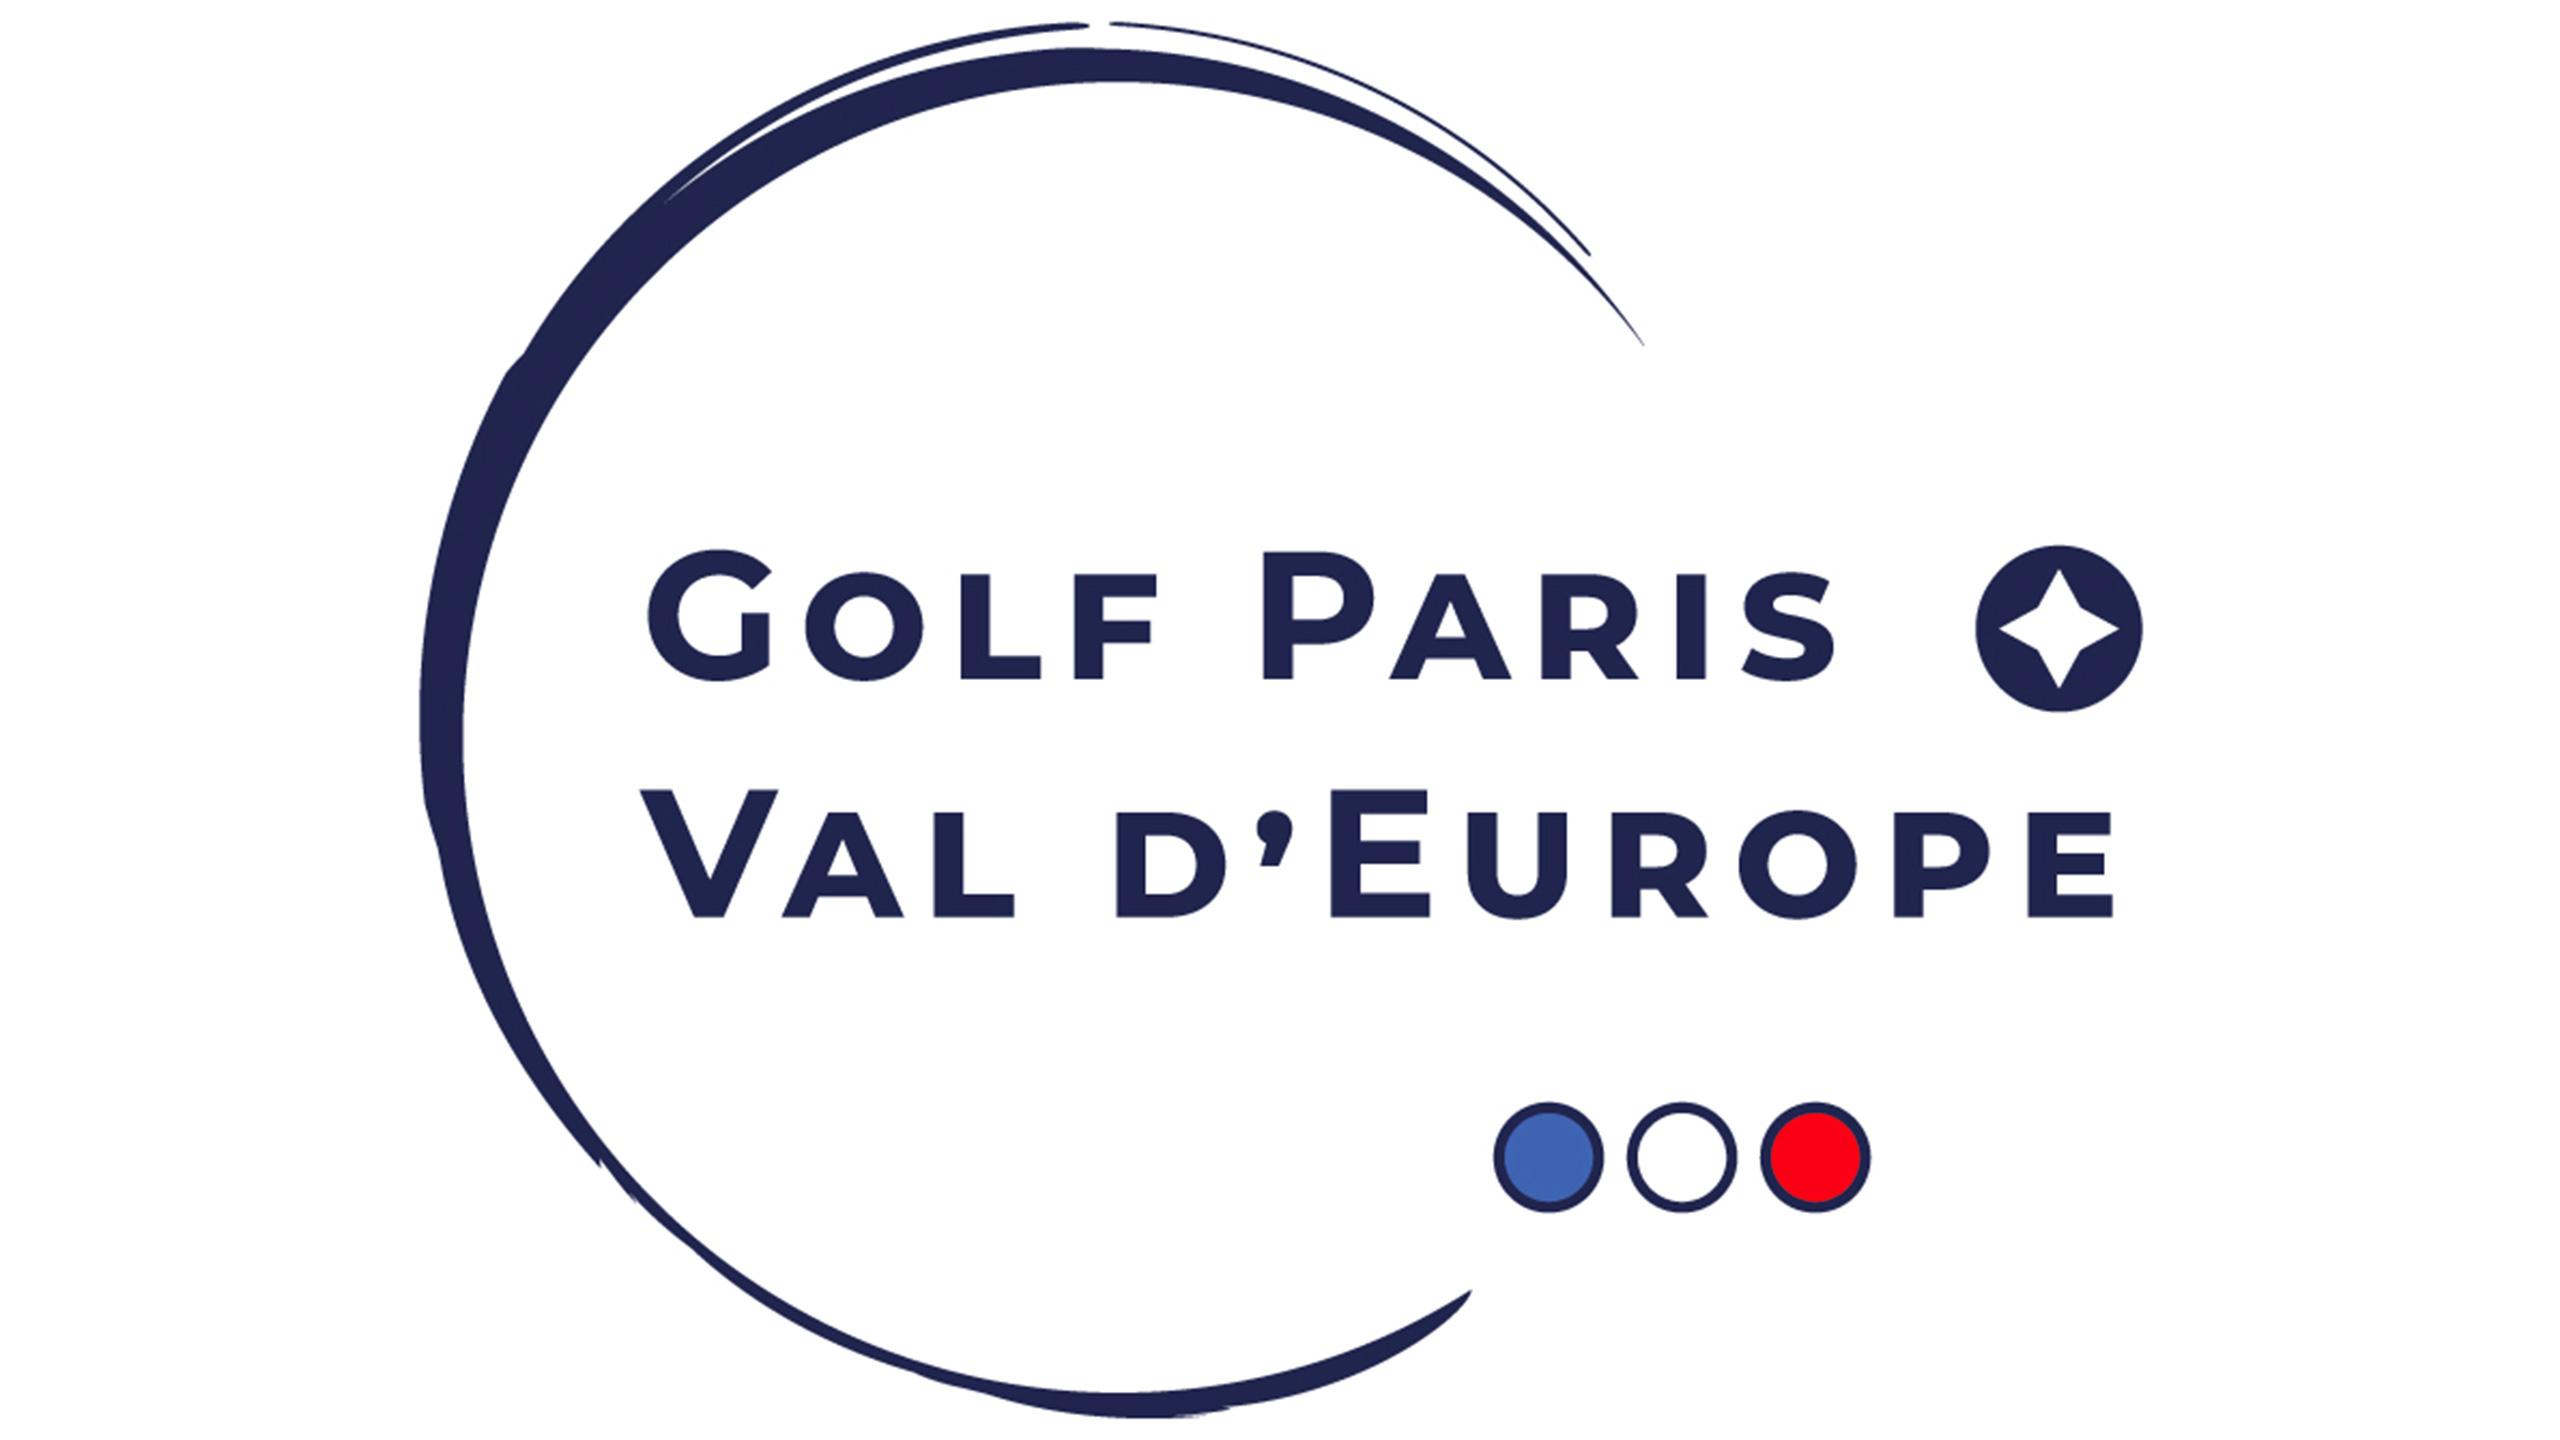 hd0000_2050dec30_world_logo-golf-paris-val-d-europe-bleu_16-9_tcm808-253598$p~1$f~jpg